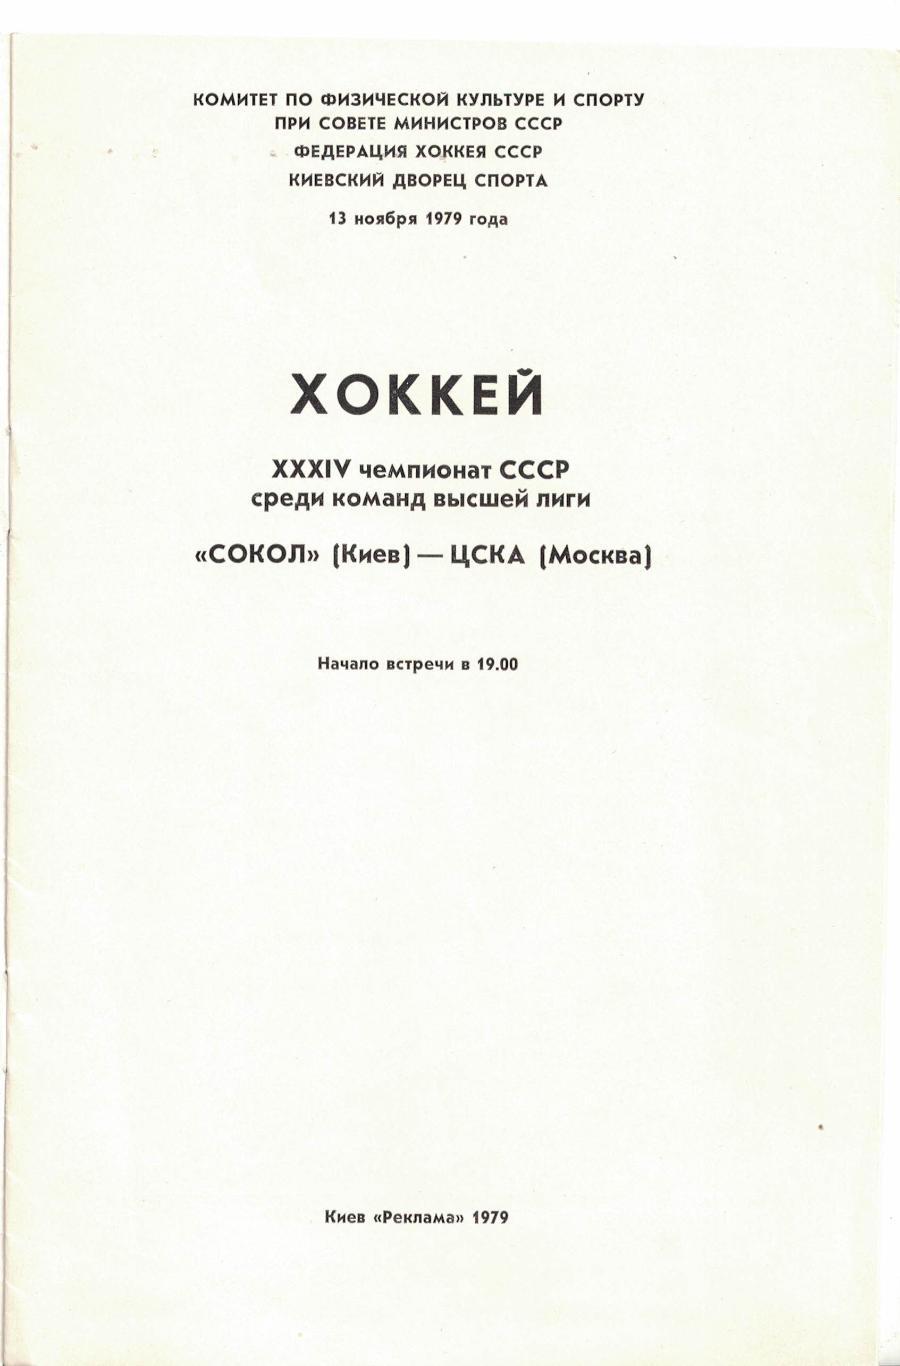 Сокол Киев - ЦСКА 13.11.1979. Чемпионат СССР 1